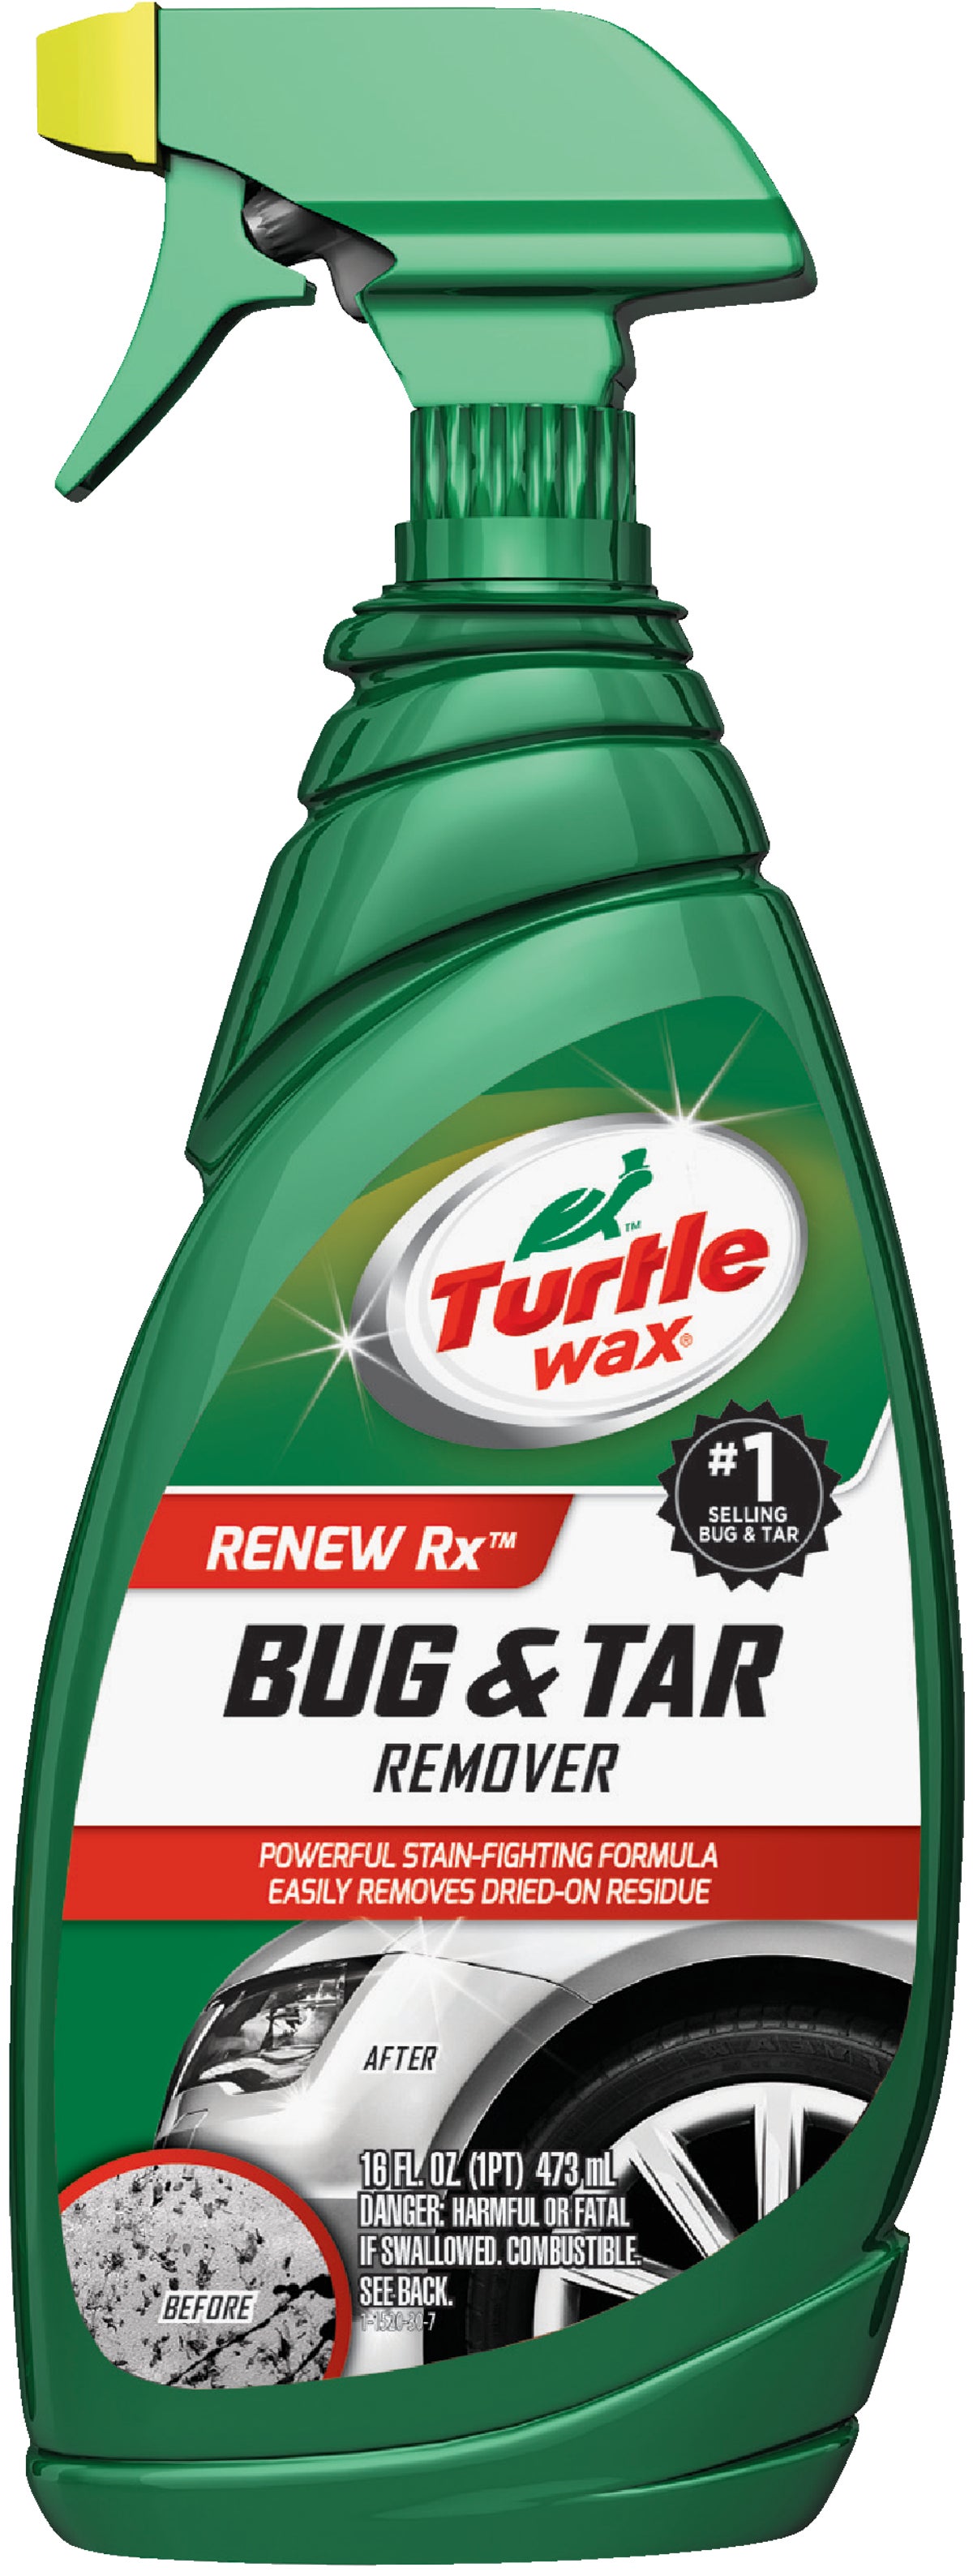 Turtle Wax 16-oz. Express Shine Spray Car Wax